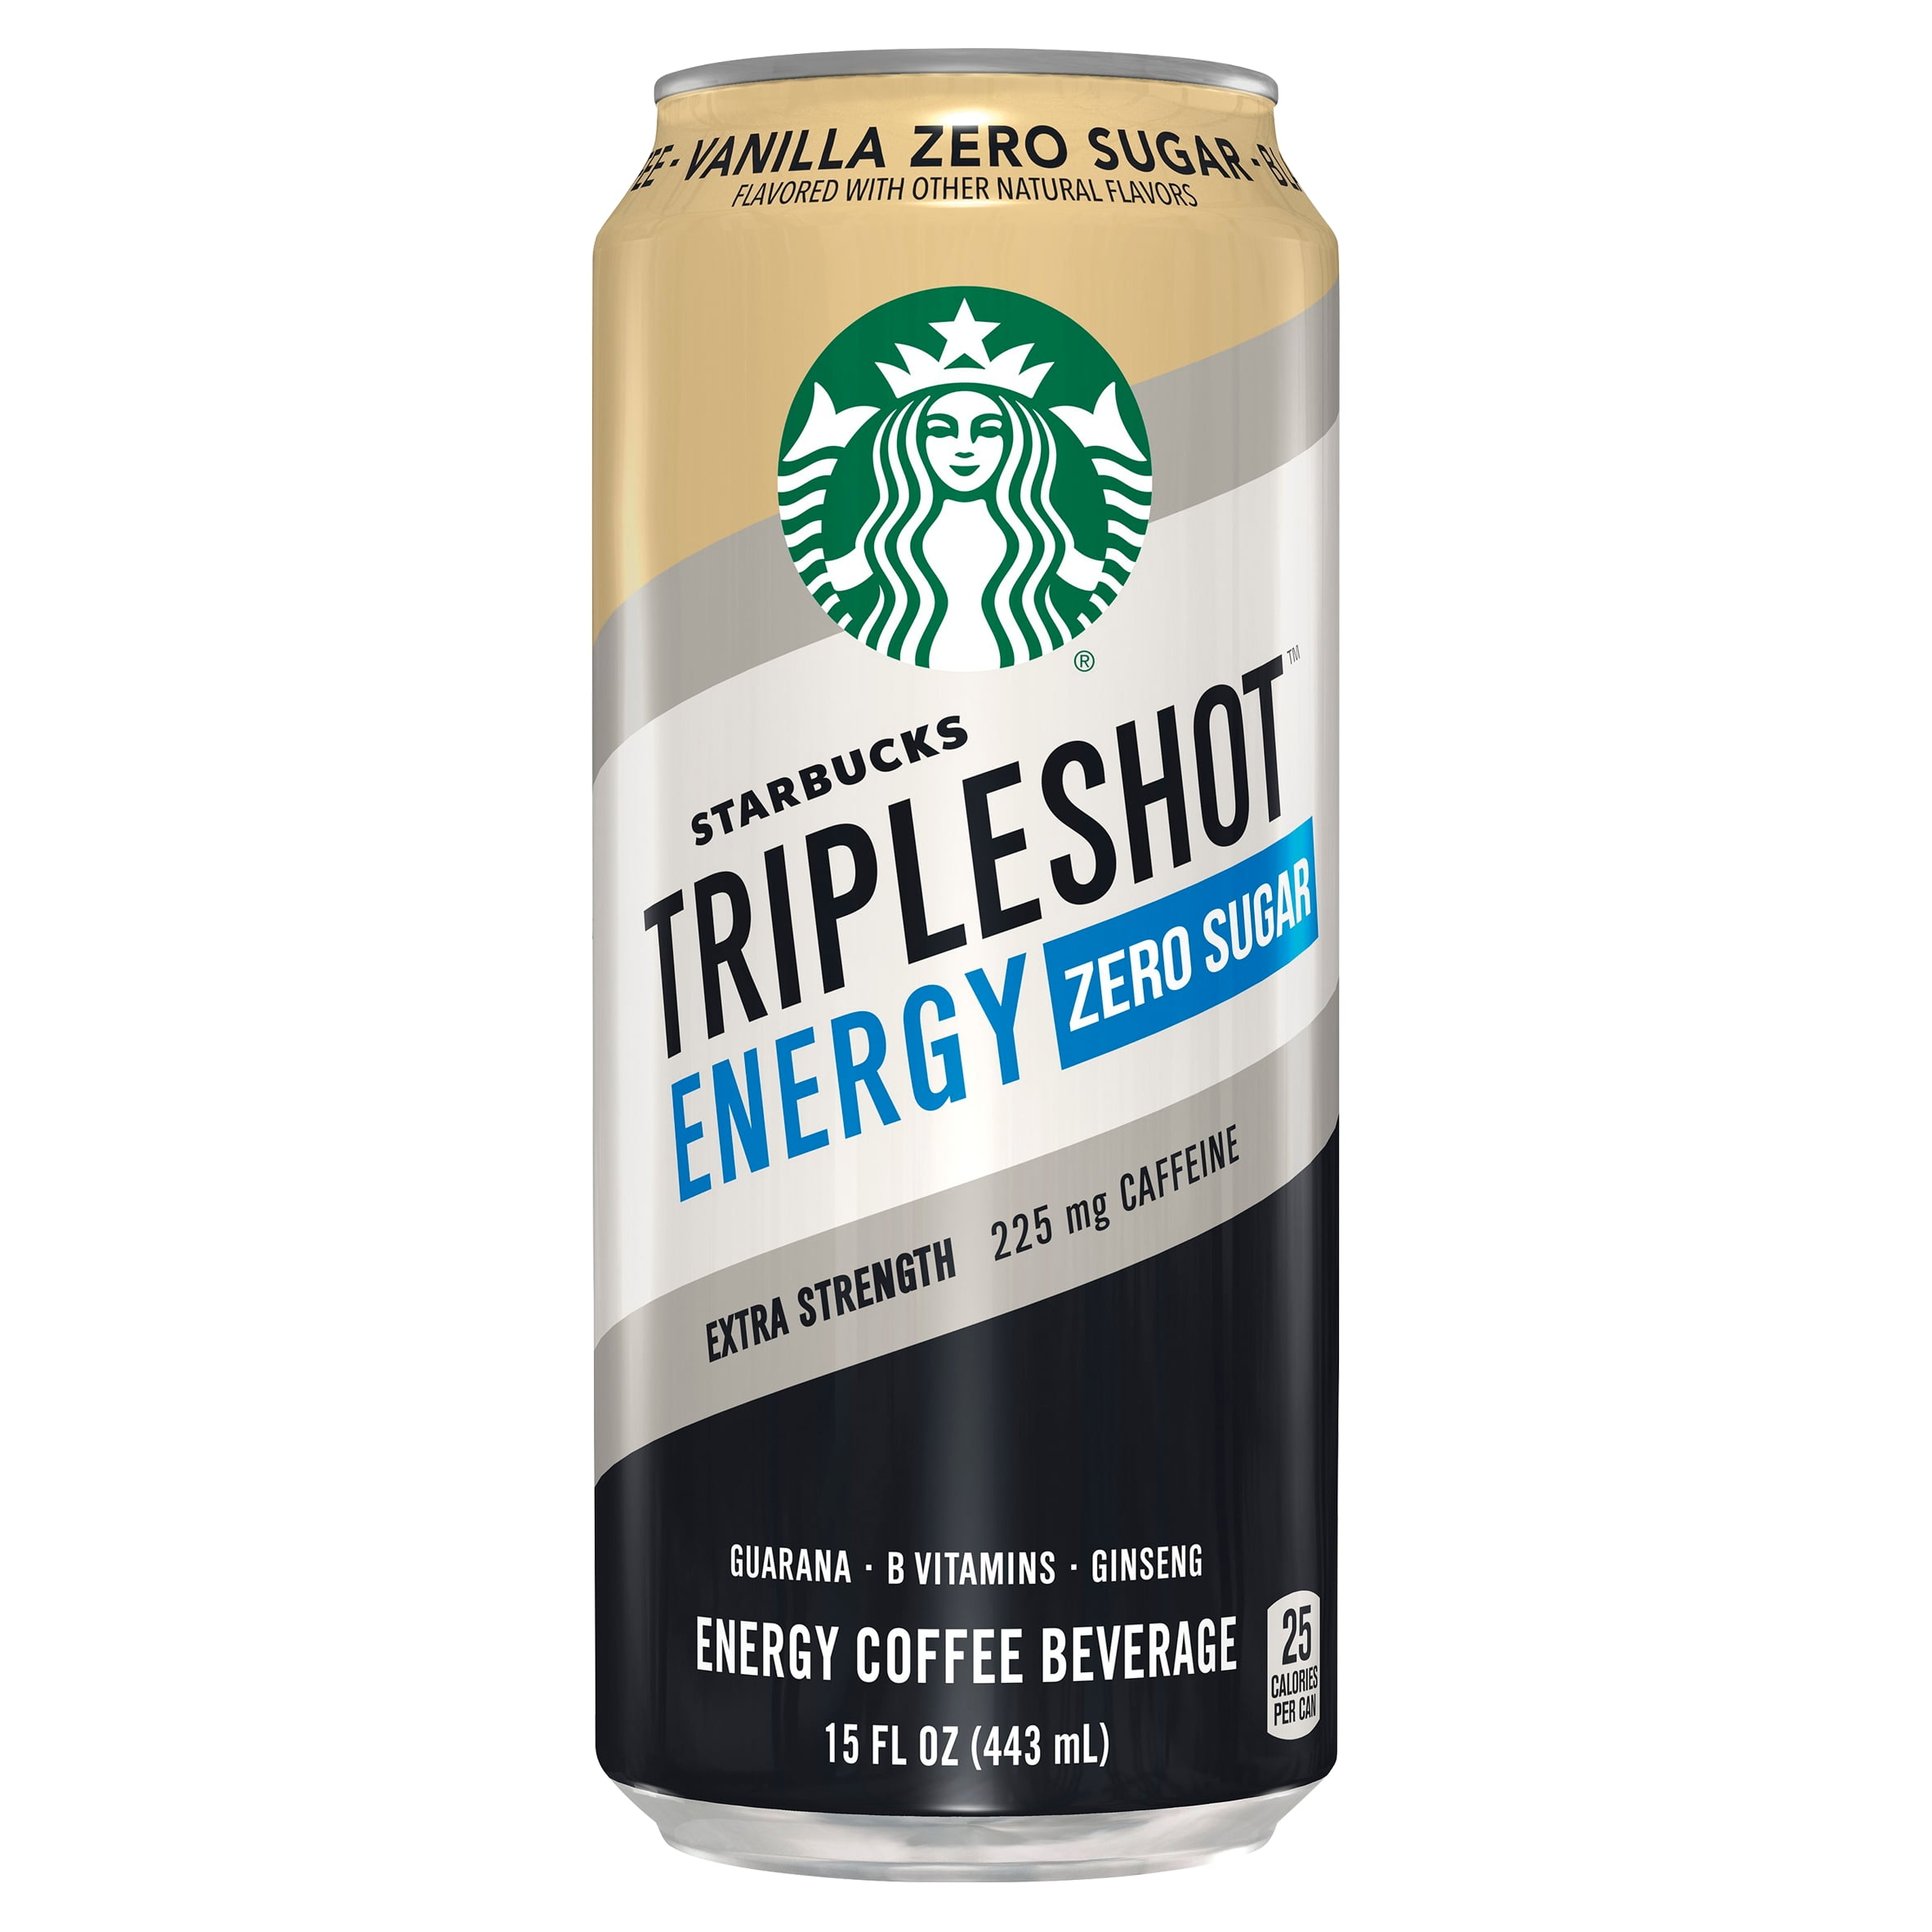 Starbucks Tripleshot Energy Zero Sugar Vanilla Extra Strength Coffee Energy Drink 15 oz Can